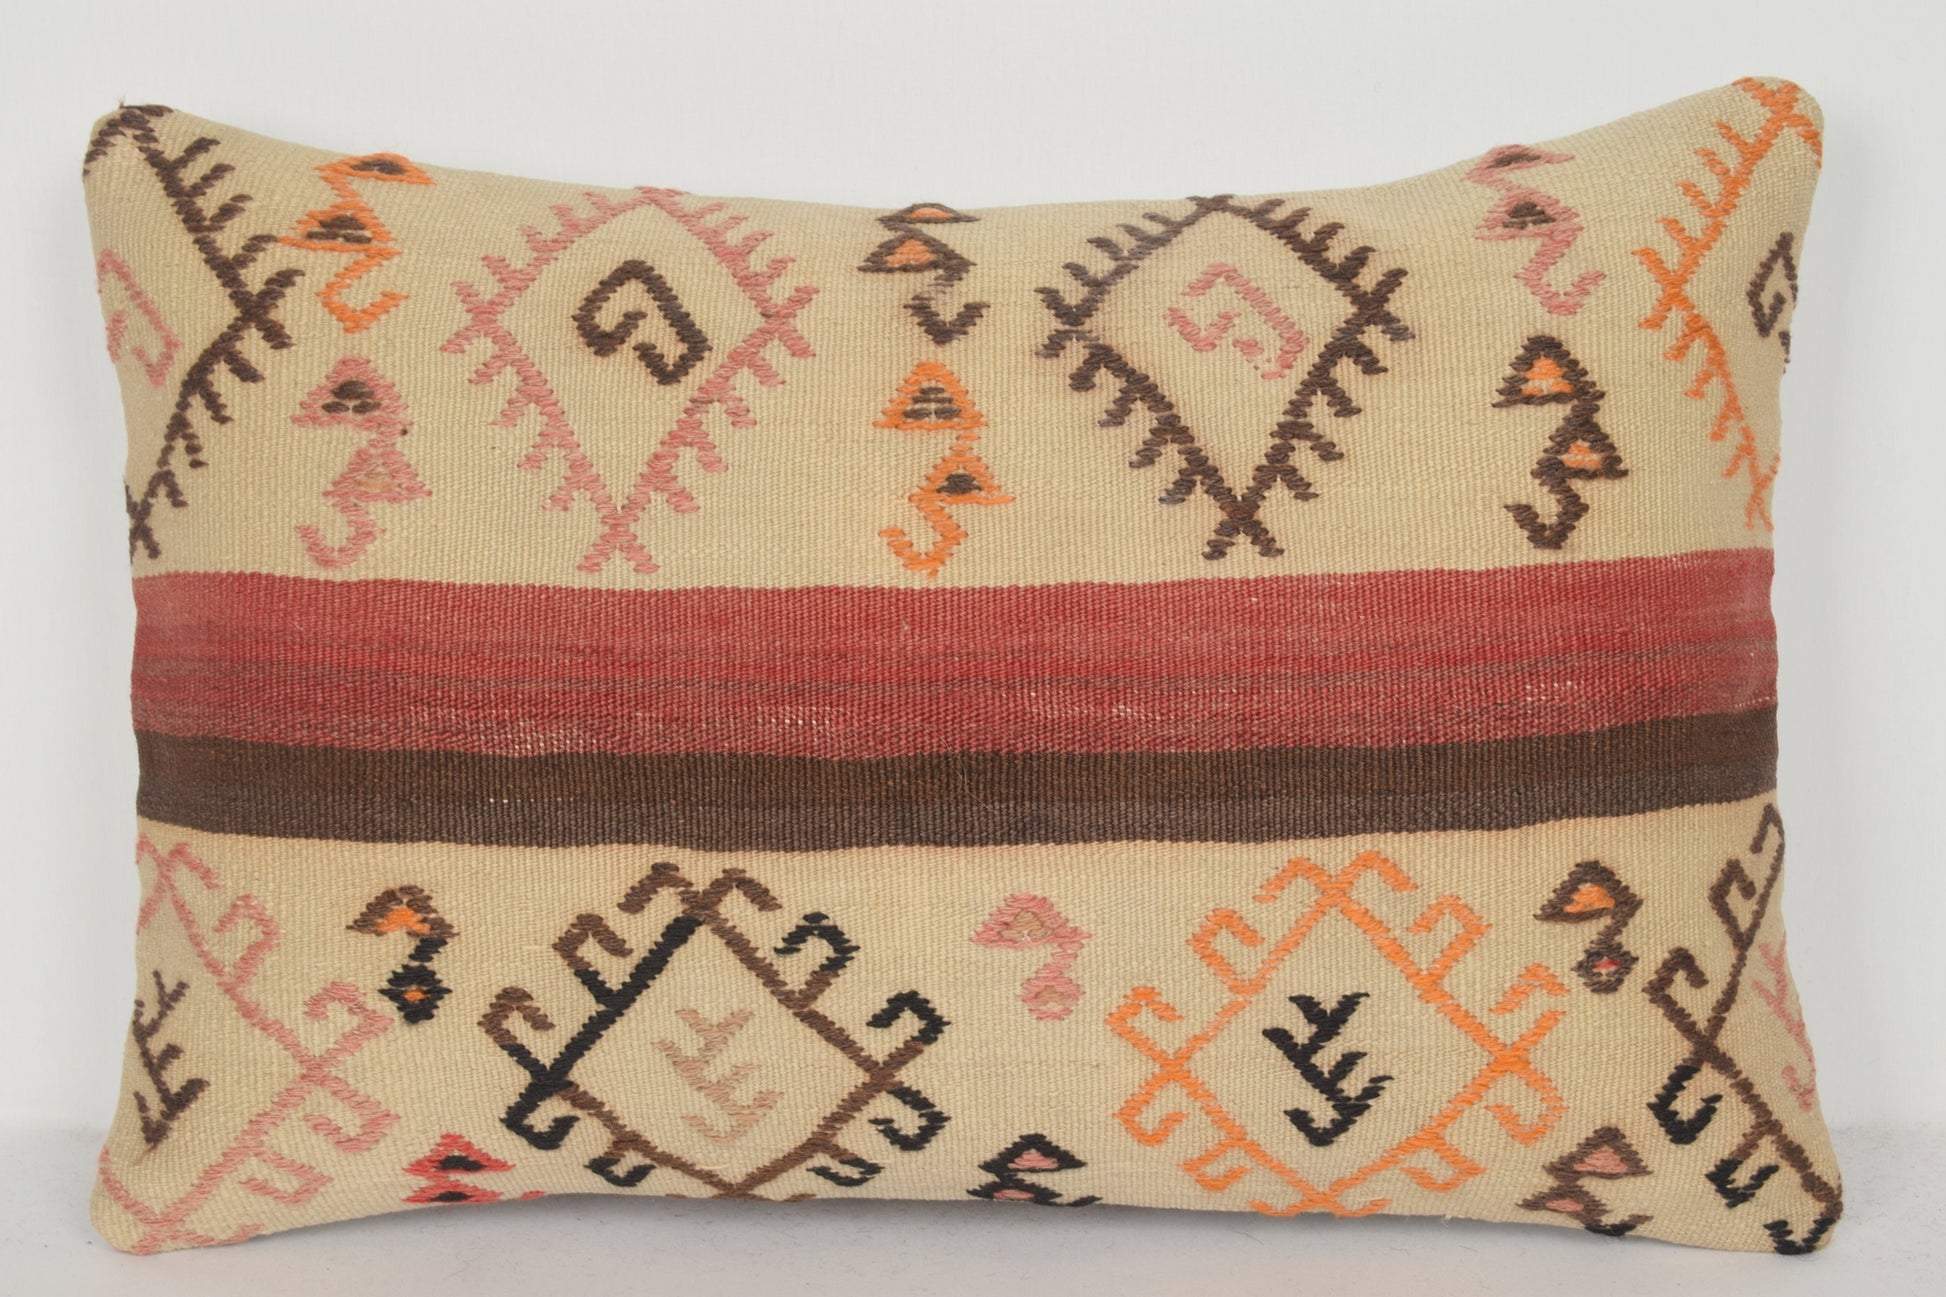 Discount Kilim Pillows E00452 Lumbar Village Hand Woven Knit